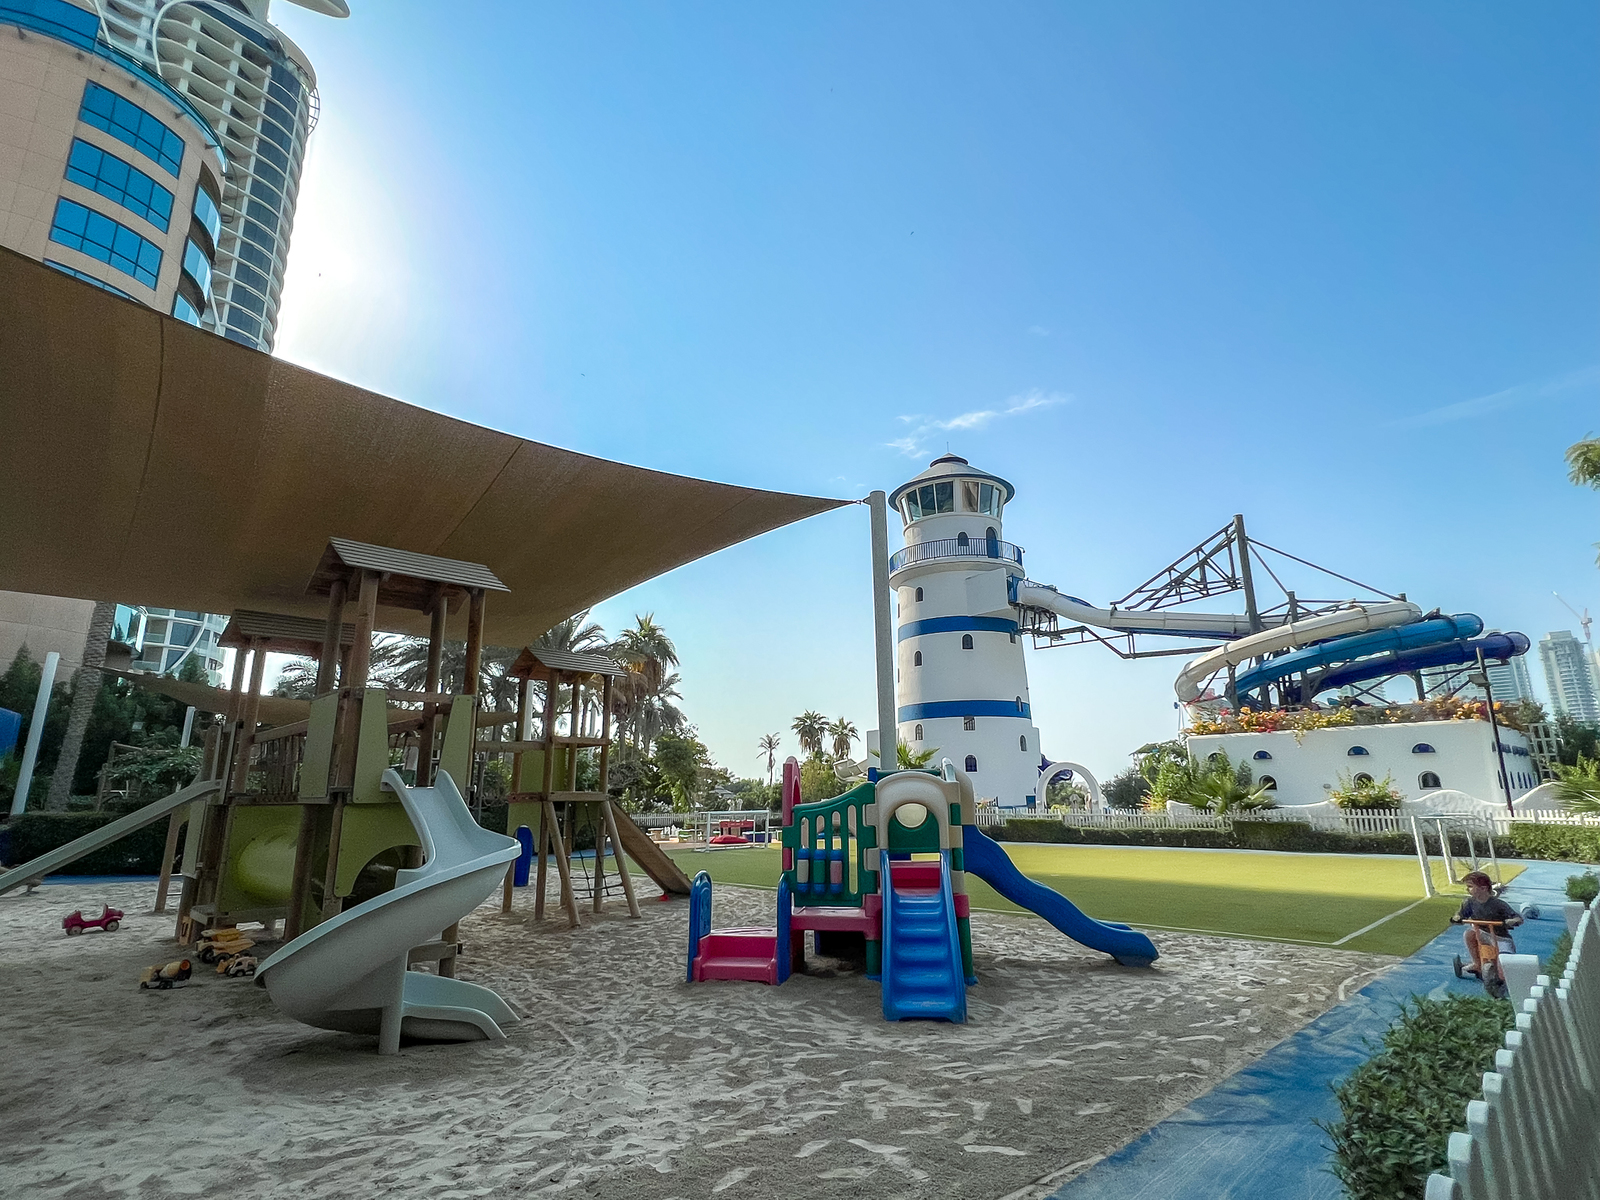 Le Meridien Mina Seyahi Beach Resort and Waterpark